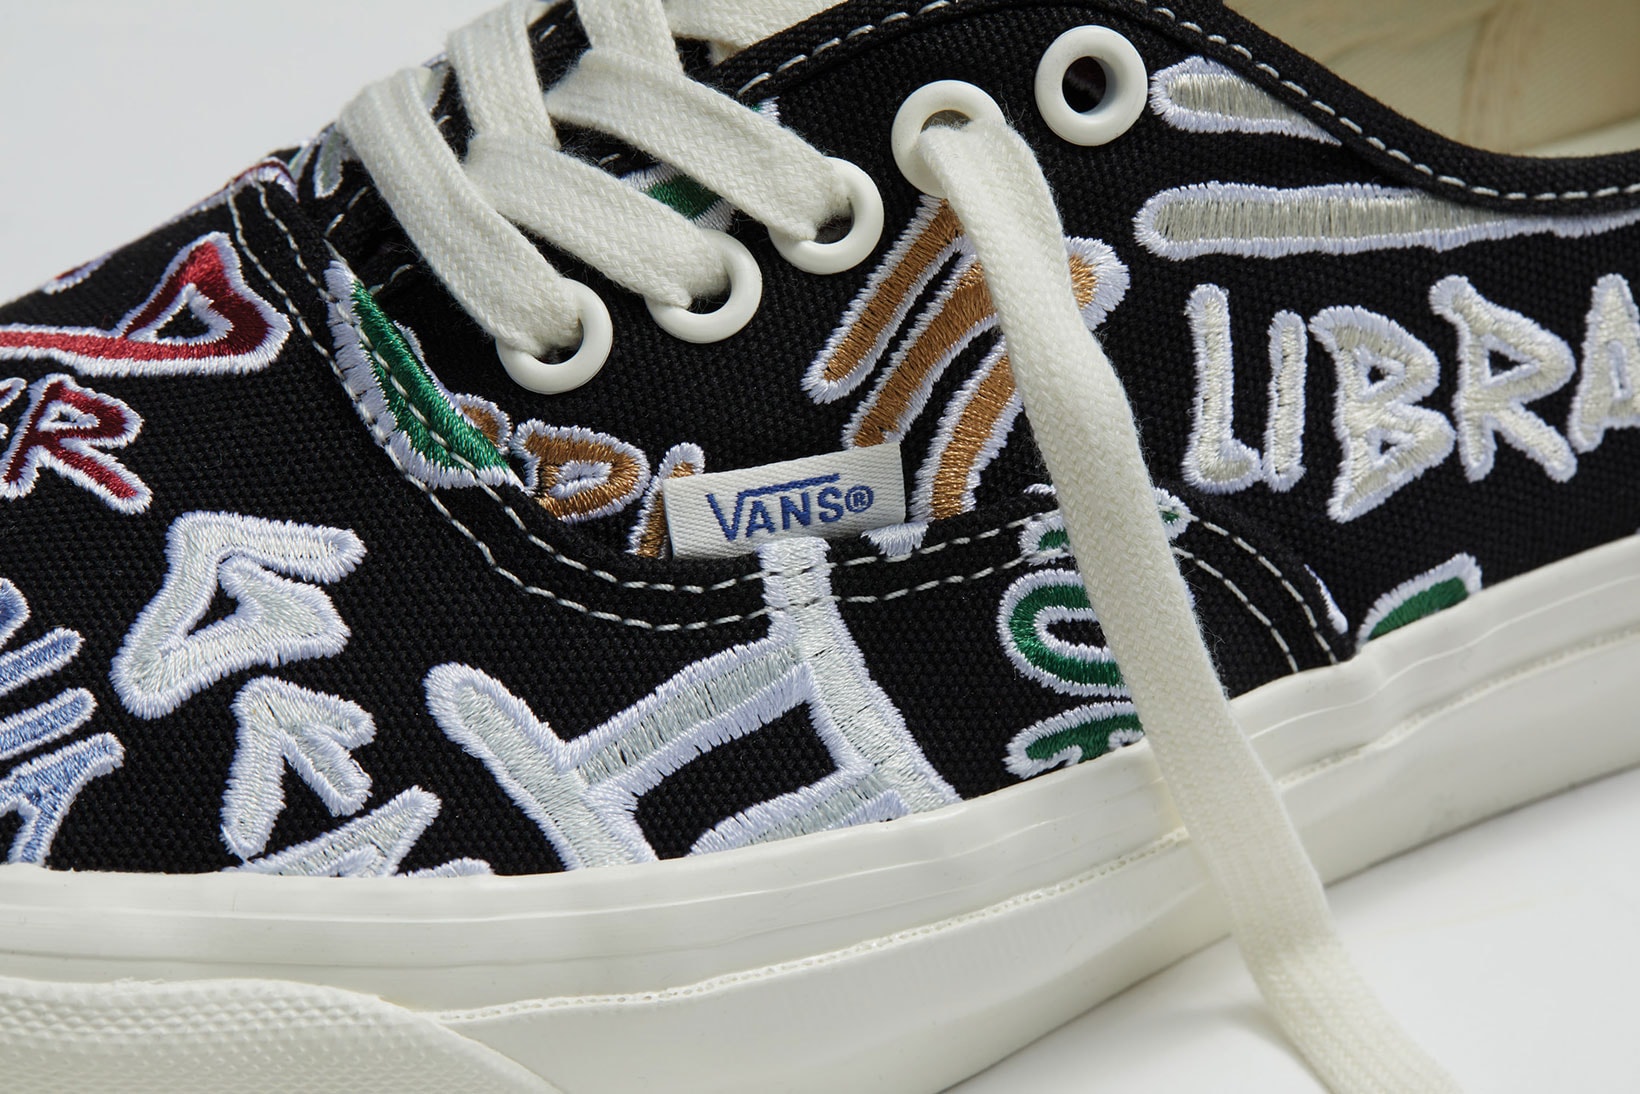 vault by vans johannes wieser og authentic lx pack collaboration sneakers astrology zodiac signs footwear shoes sneakerhead